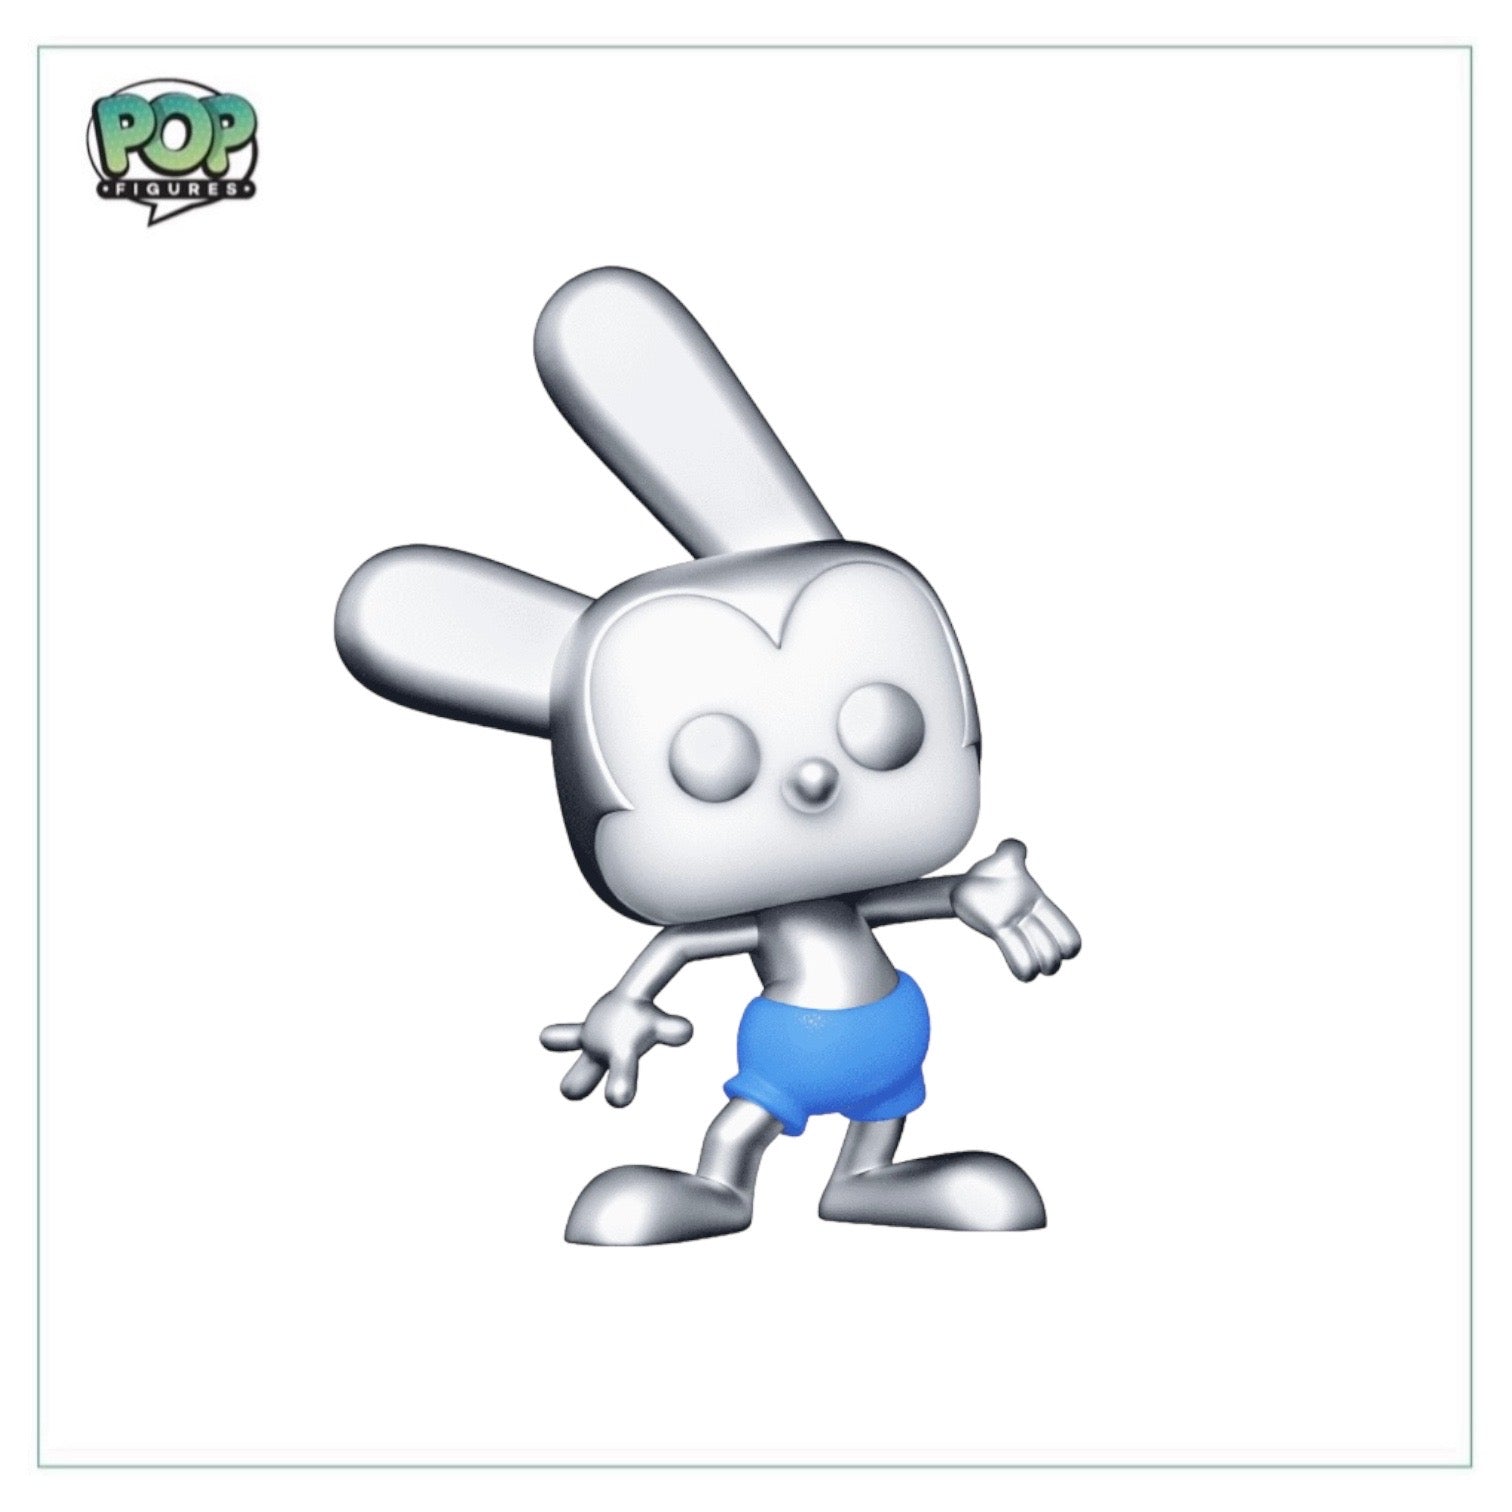 Oswald Rabbit #1350 (Platinum) Funko Pop! - Disney 100 - Disney Store Exclusive